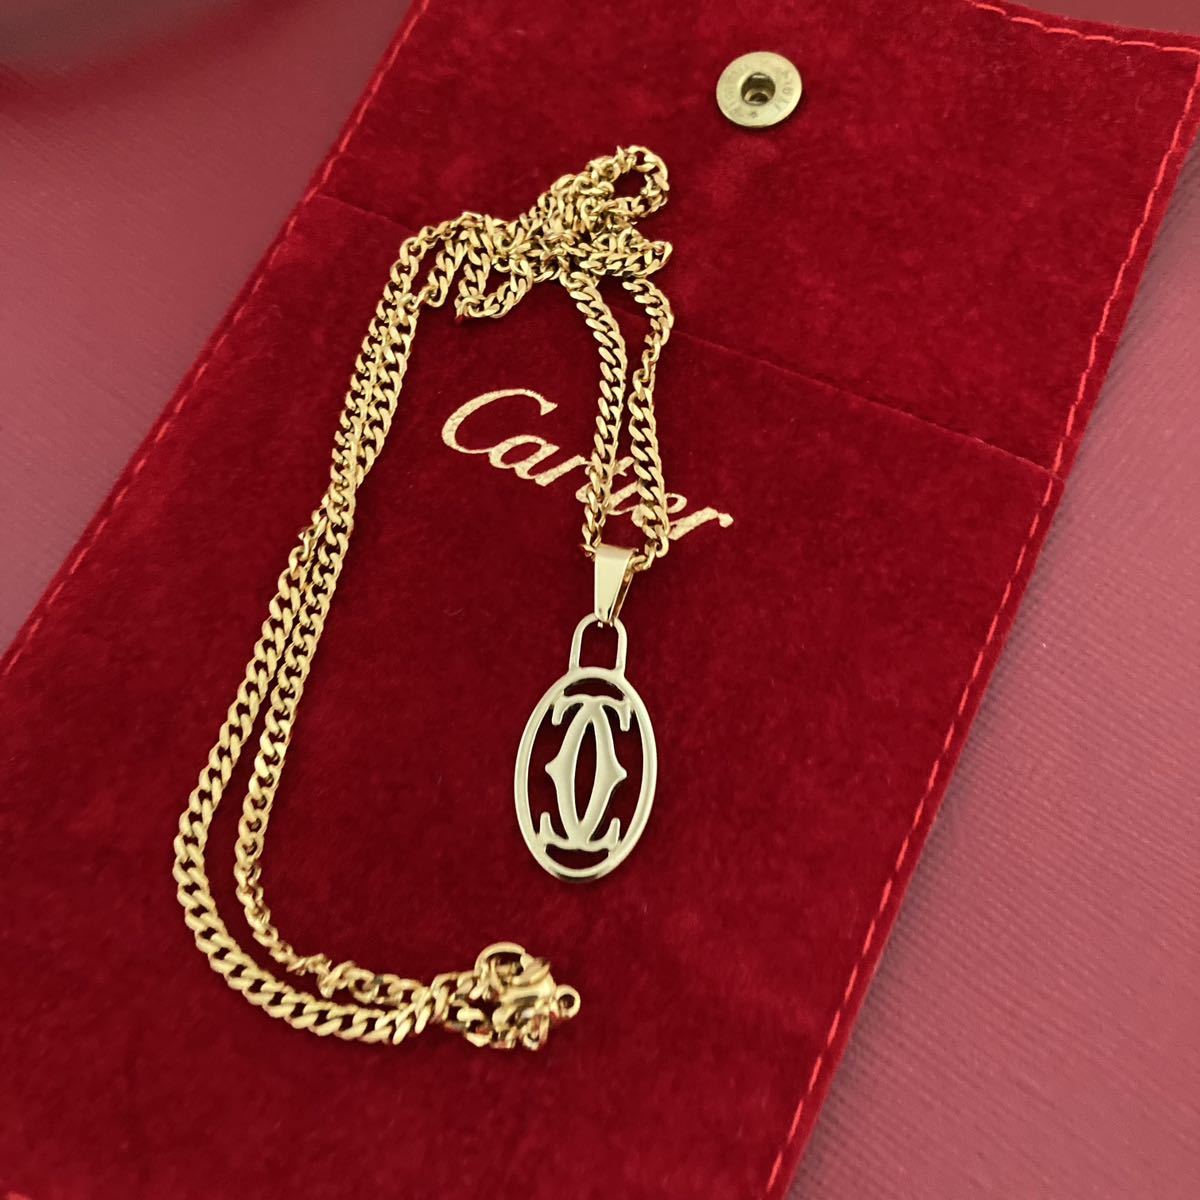  Cartier regular goods popular charm necklace ultimate beautiful goods rare color storage bag attaching wonderful. 